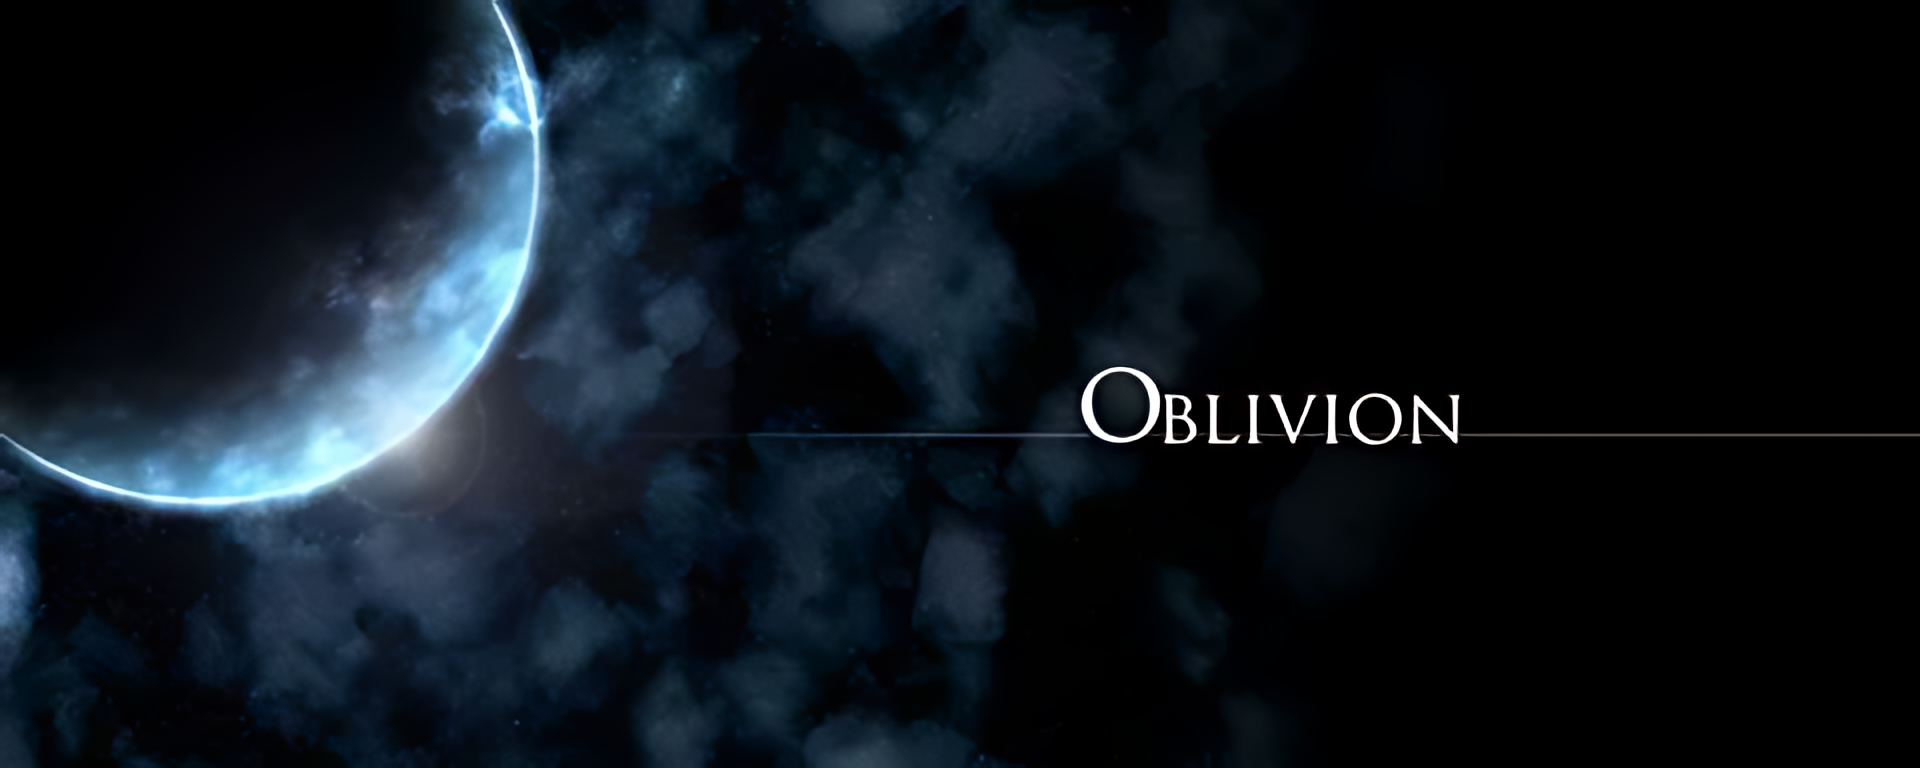 Oblivion - A Voice Of The Universe 2019 (Ultra HD 4K)